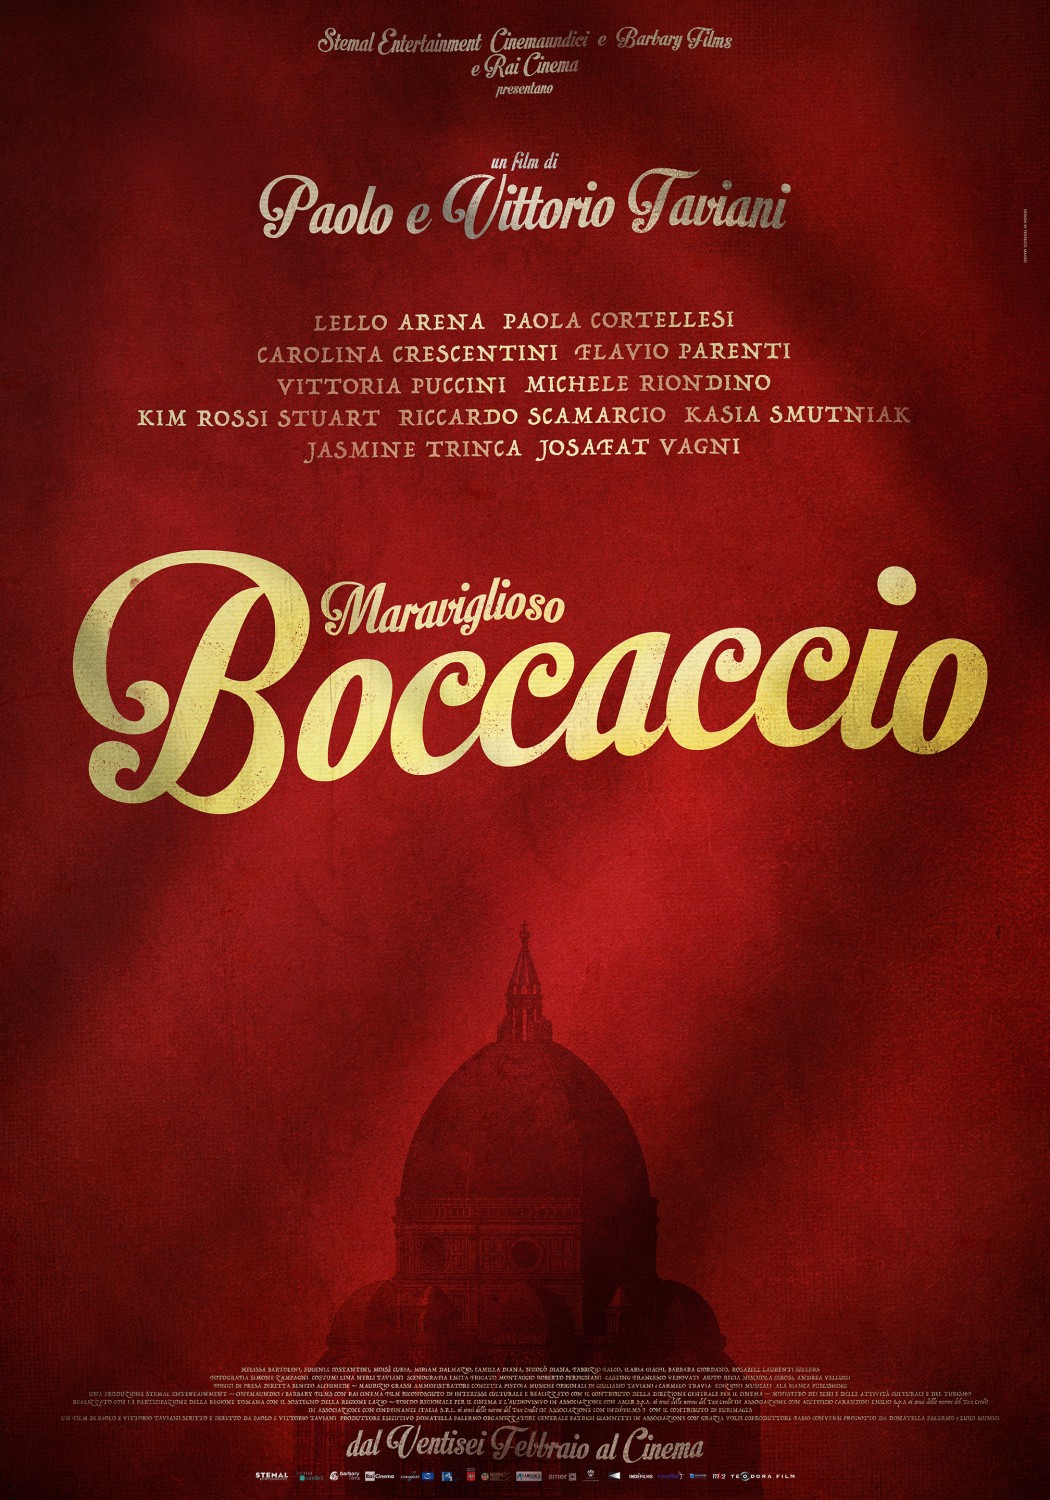 Extra Large Movie Poster Image for Meraviglioso Boccaccio (#1 of 2)